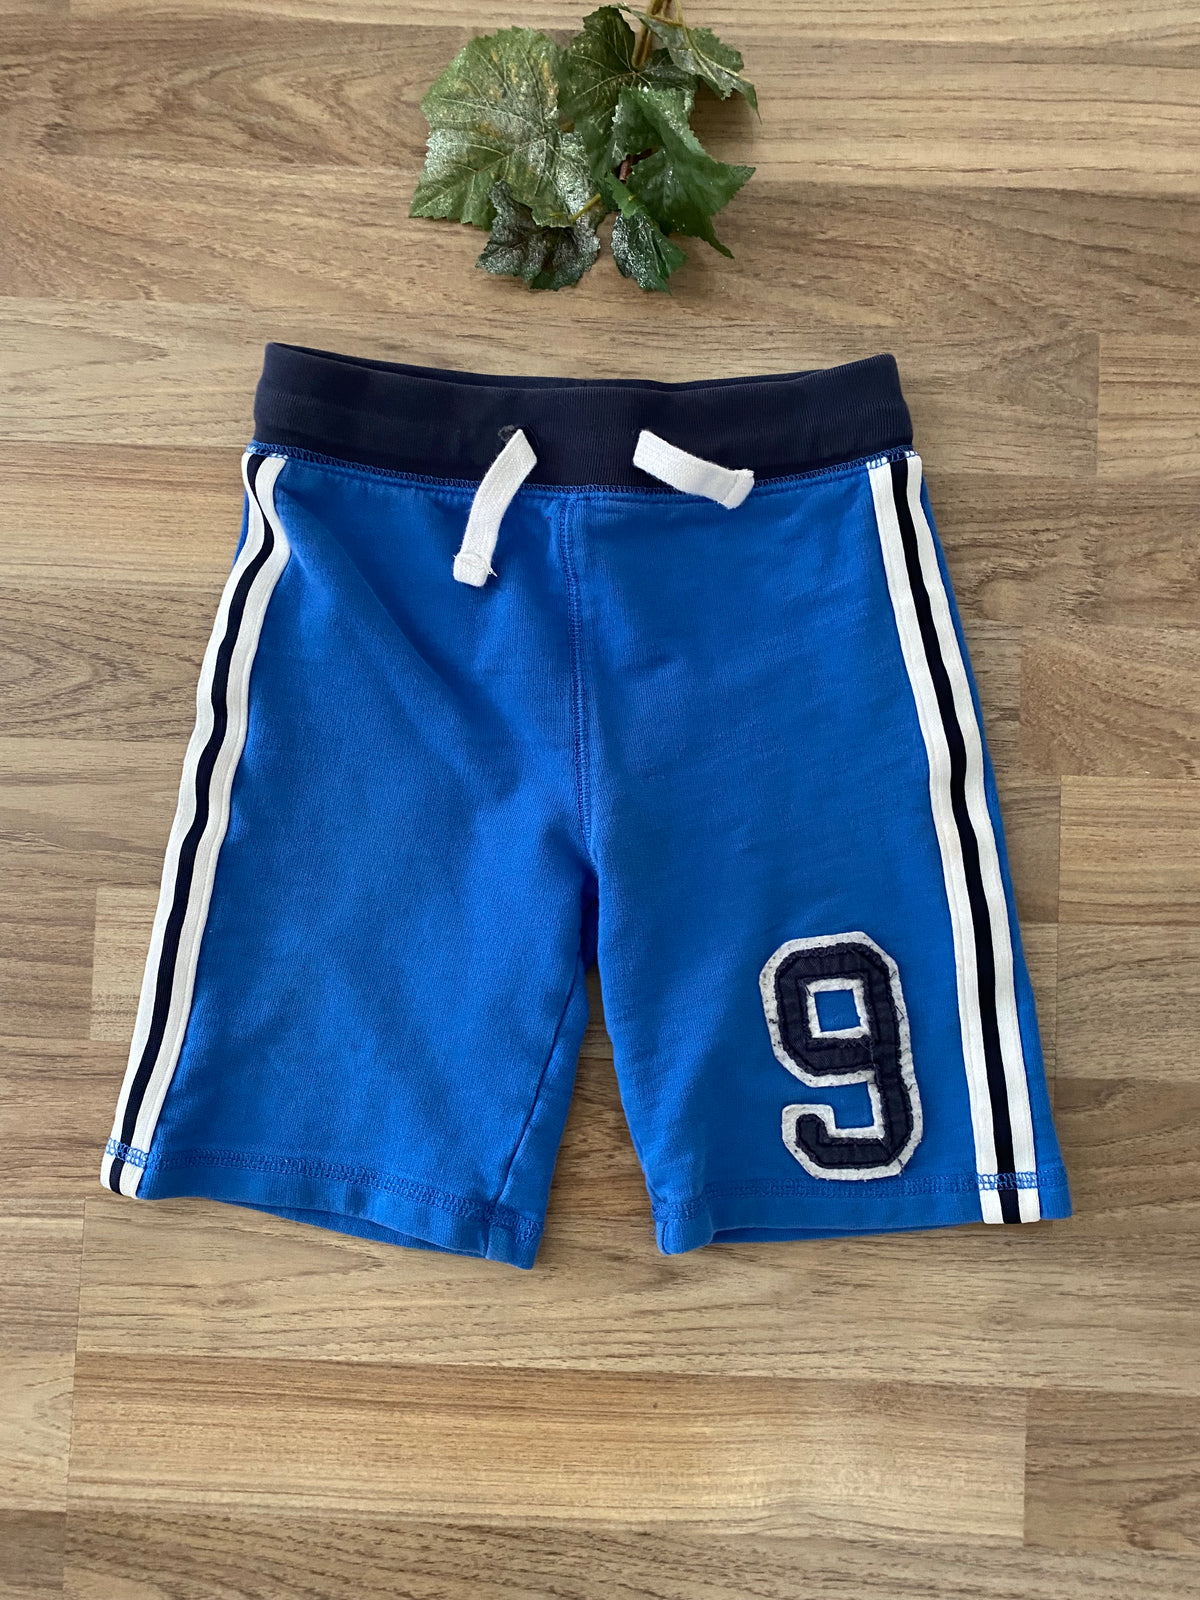 Shorts (Boys Size 7)